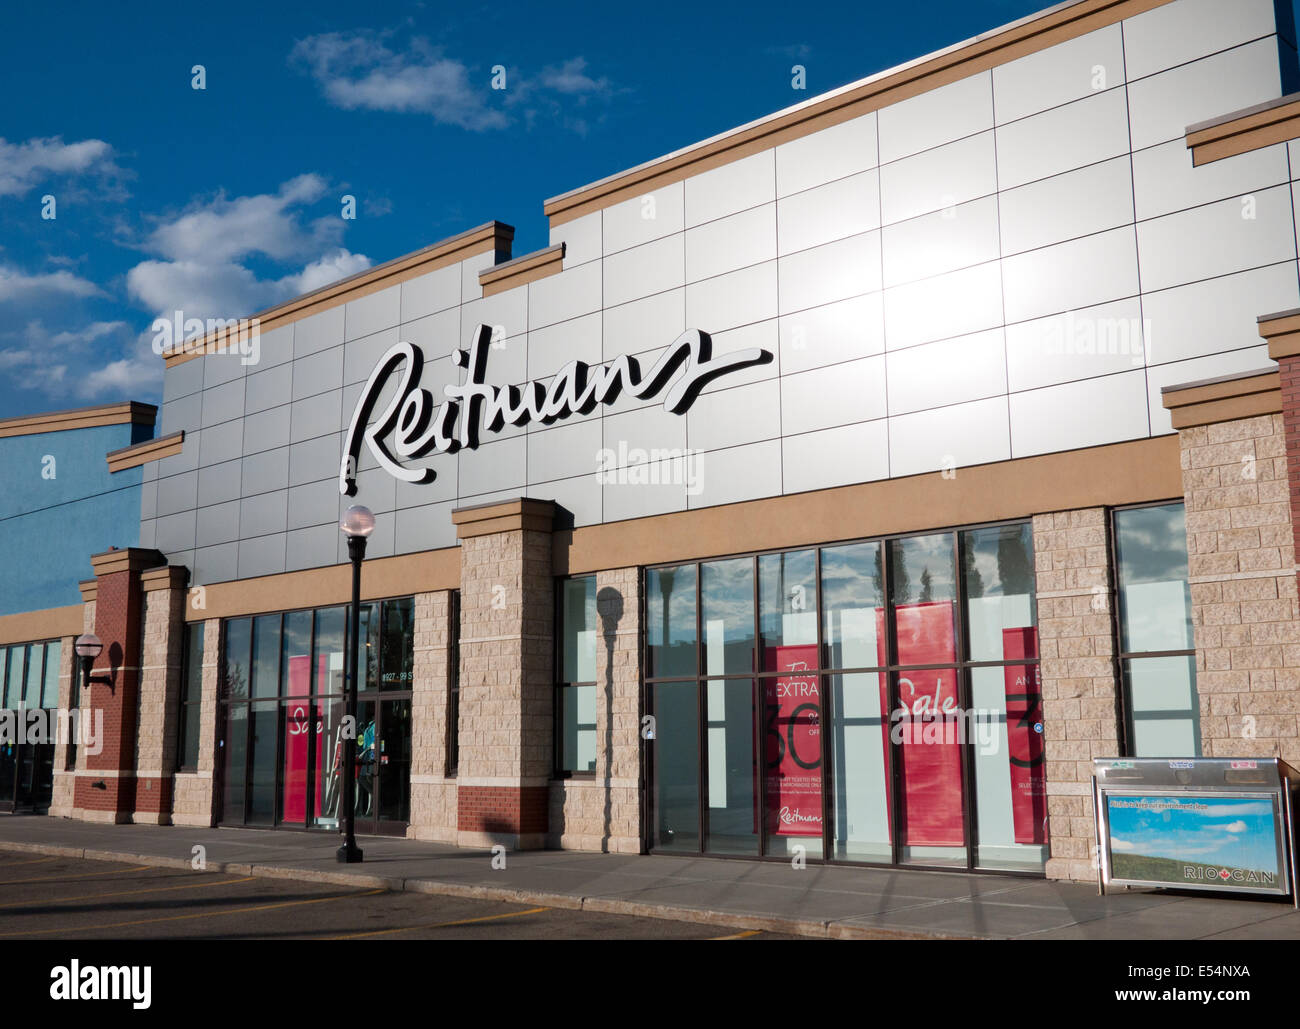 A Reitmans clothing store in Edmonton, Alberta, Canada Stock Photo